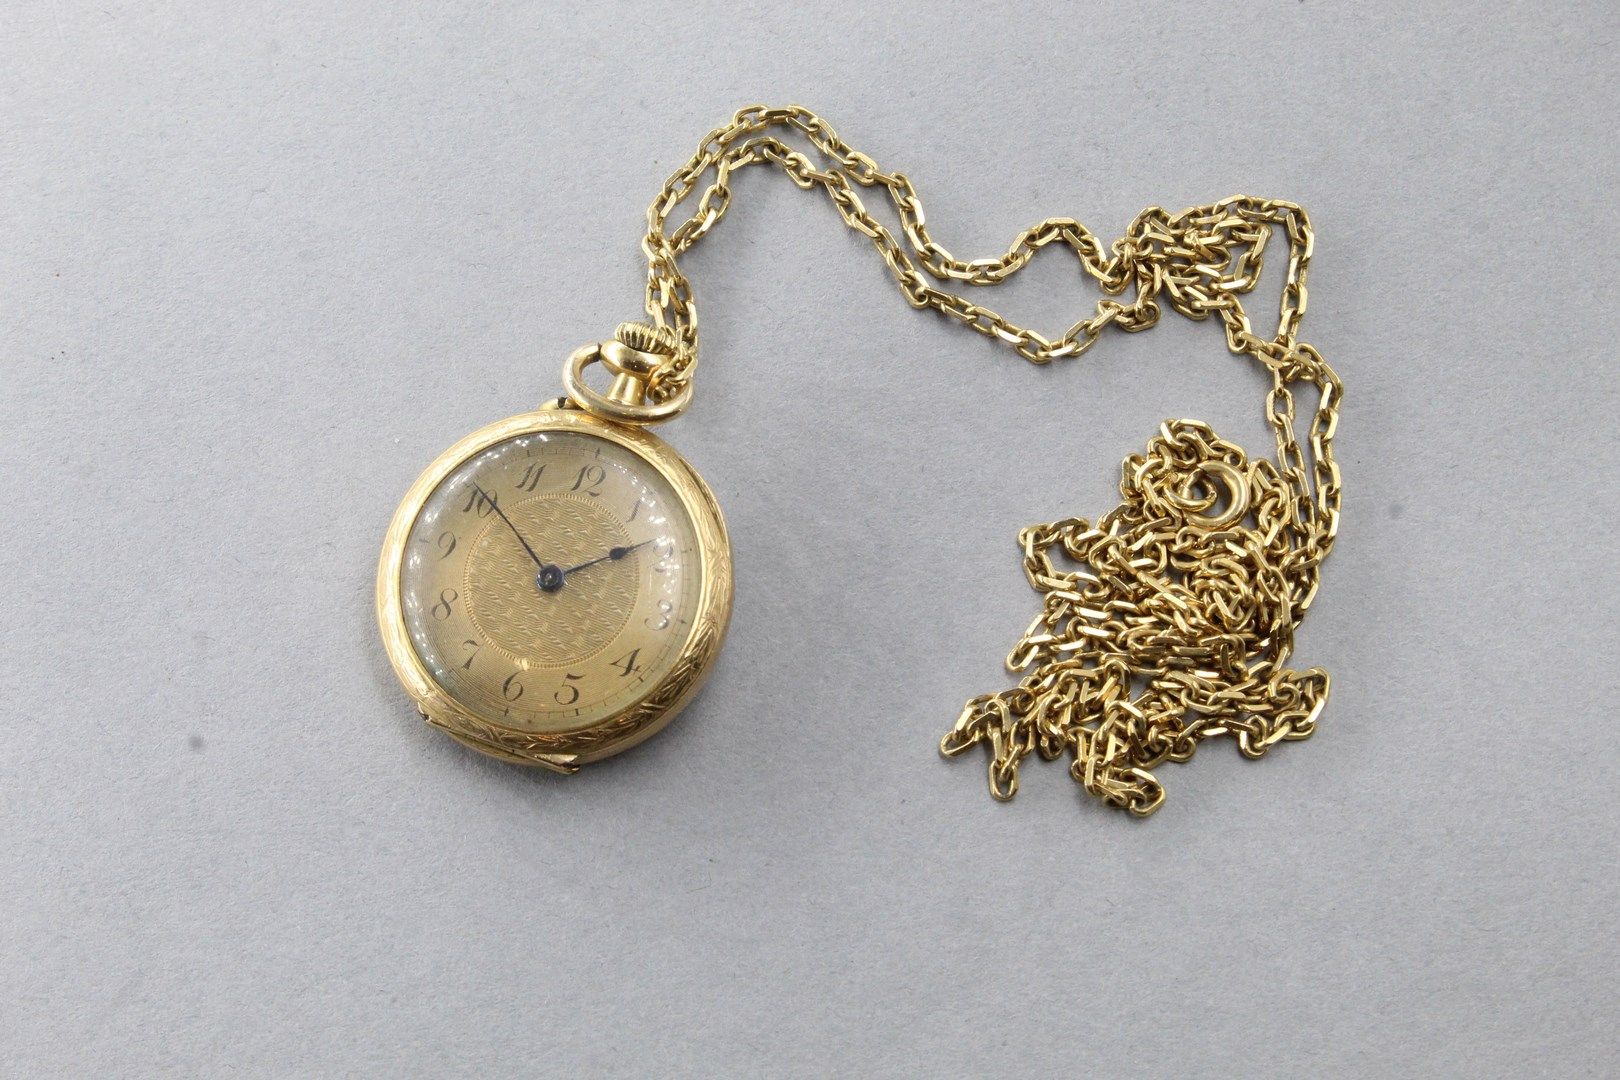 Null 18K（750）黄金领表，表盘有鎏金玑镂背景。

阿拉伯数字表示小时。碗是扭索纹的。

马头标志。

直径：30毫米。- 毛重：19.04克。

(可&hellip;